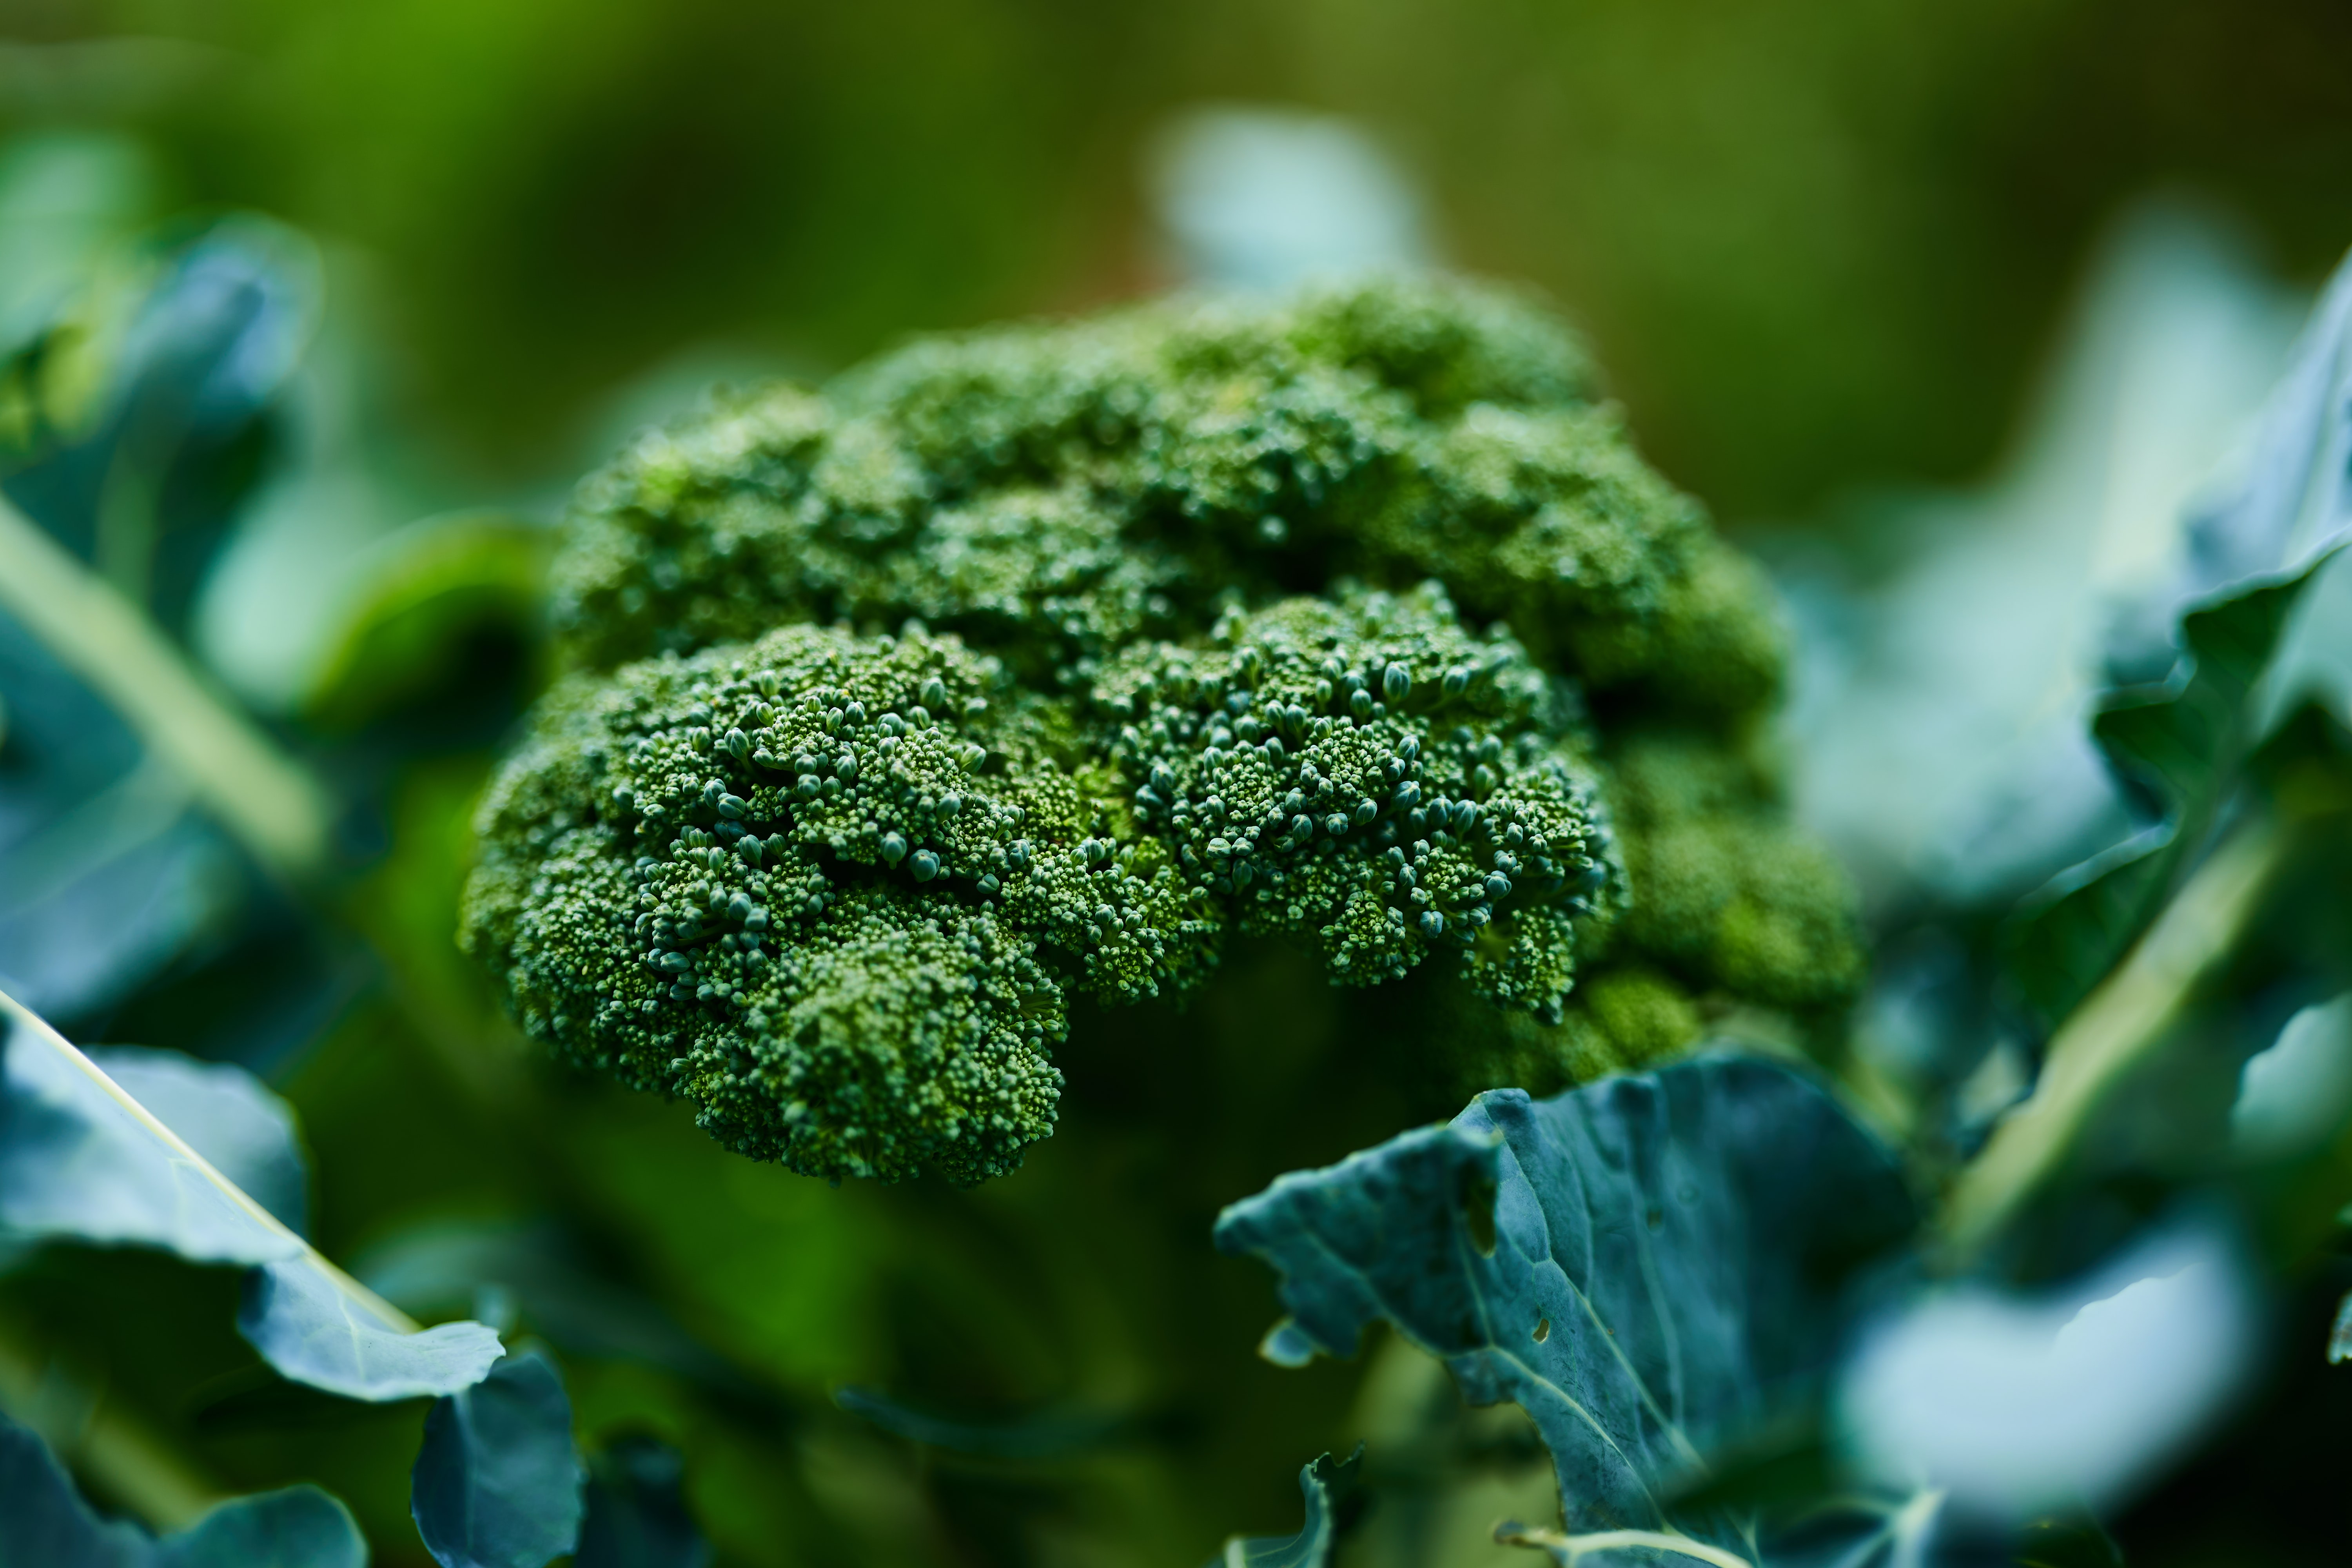 Broccoli greenhouse farming: Photo by unsplash